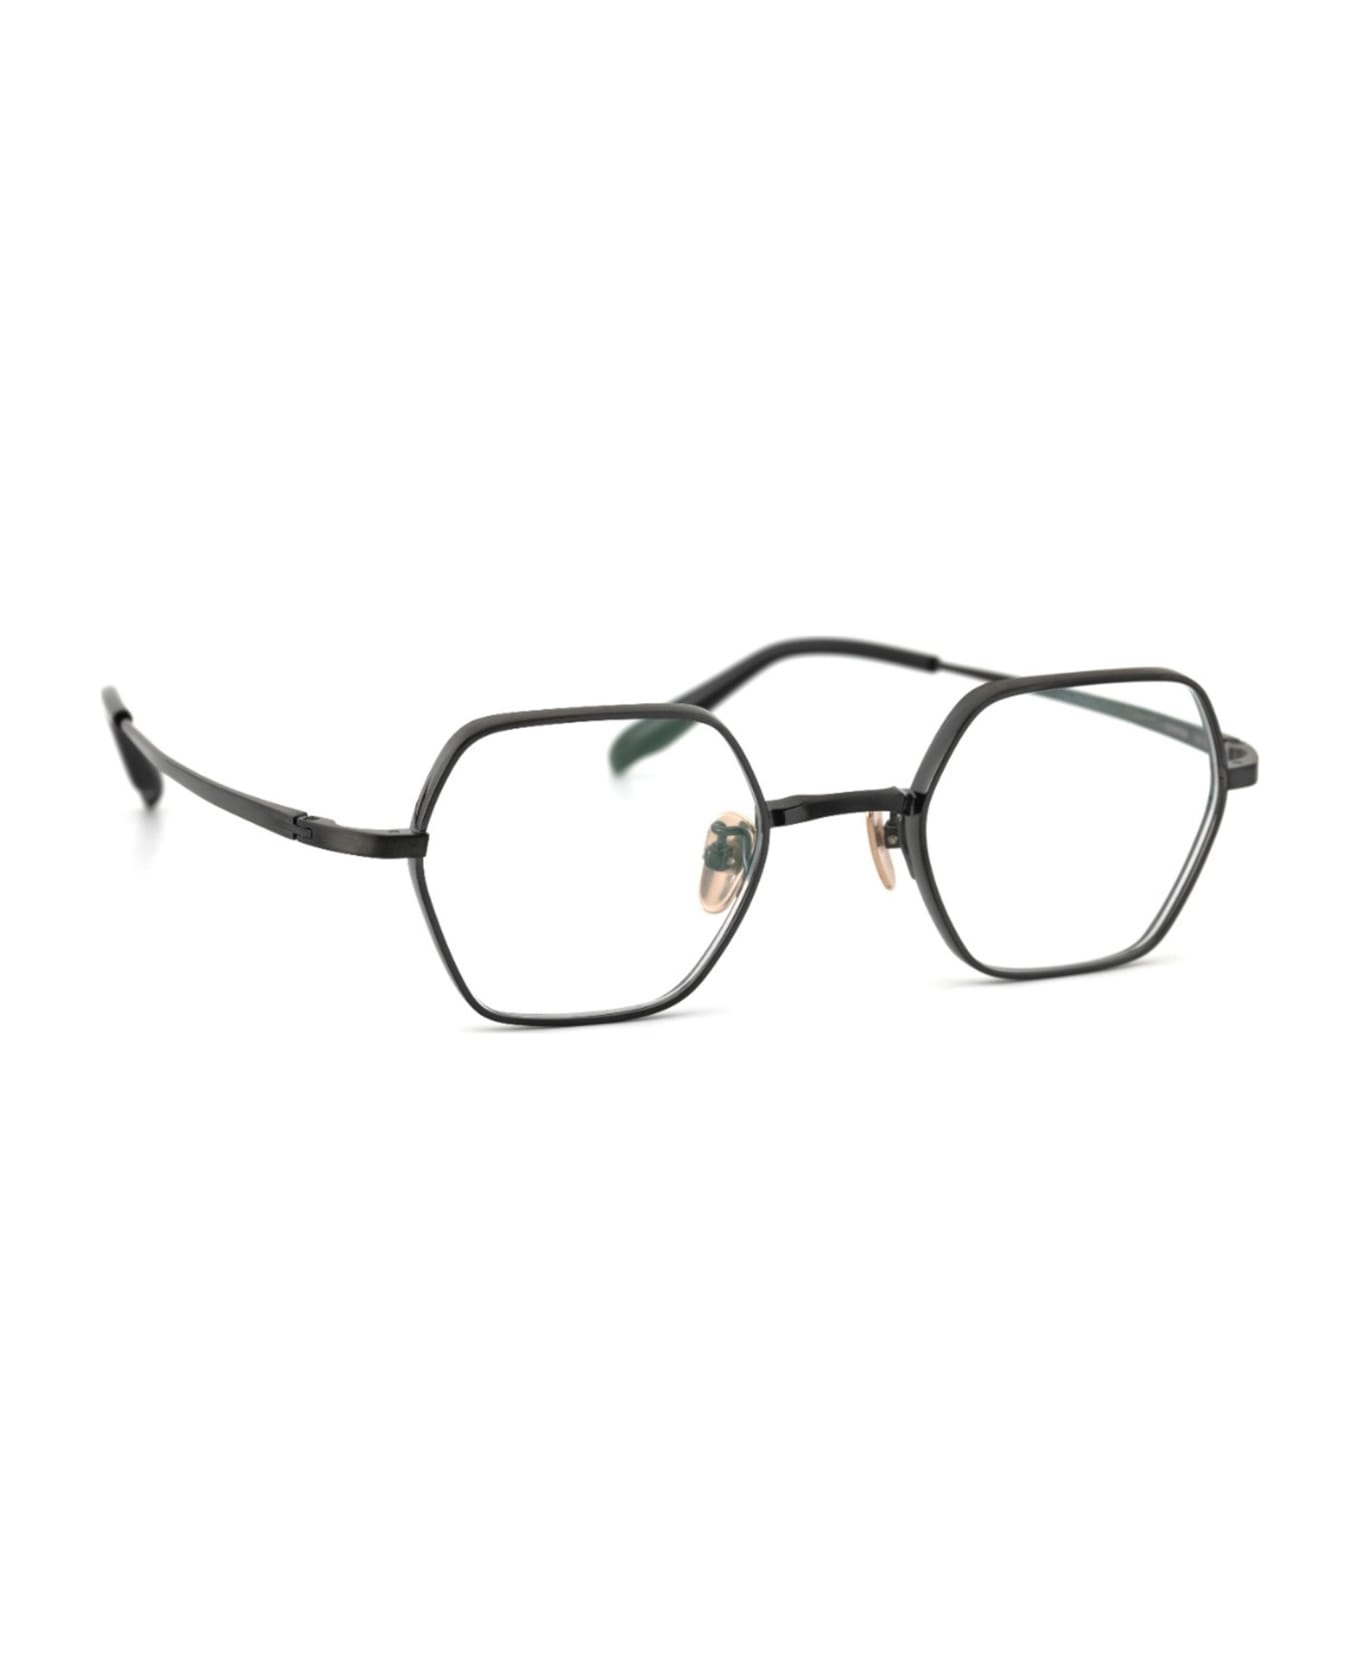 FACTORY900 Titanos X Factory900 Mf-005 - Black Rx Glasses - Black アイウェア